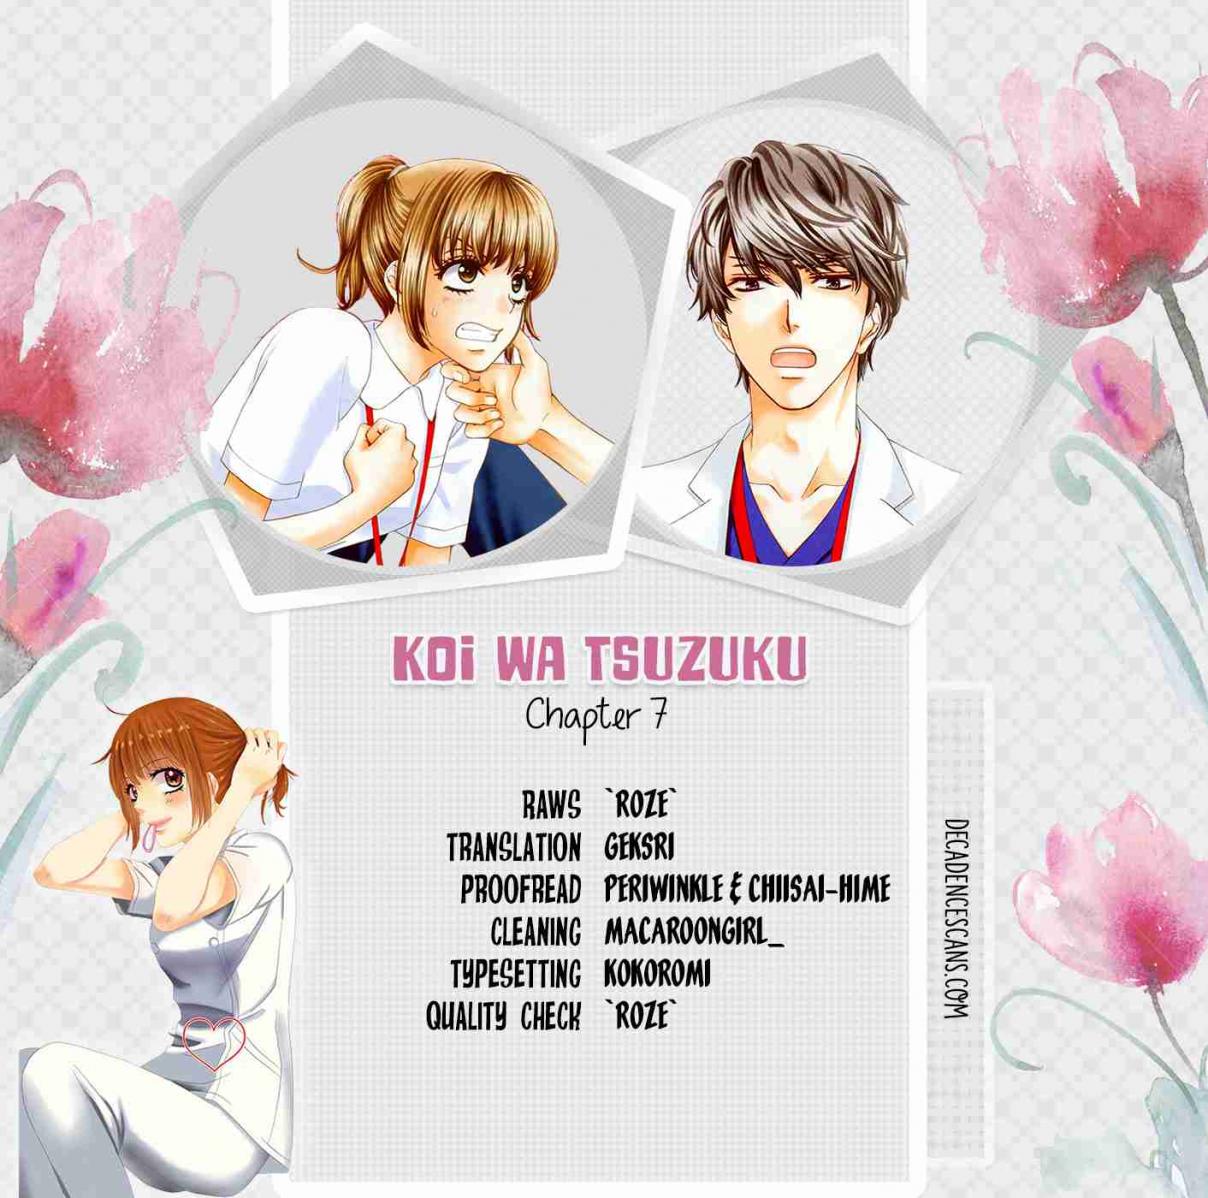 Koi wa Tsuzuku yo Dokomade mo Vol. 2 Ch. 7 7th ♥ Love Holding Your Lover's Hand For the First Time